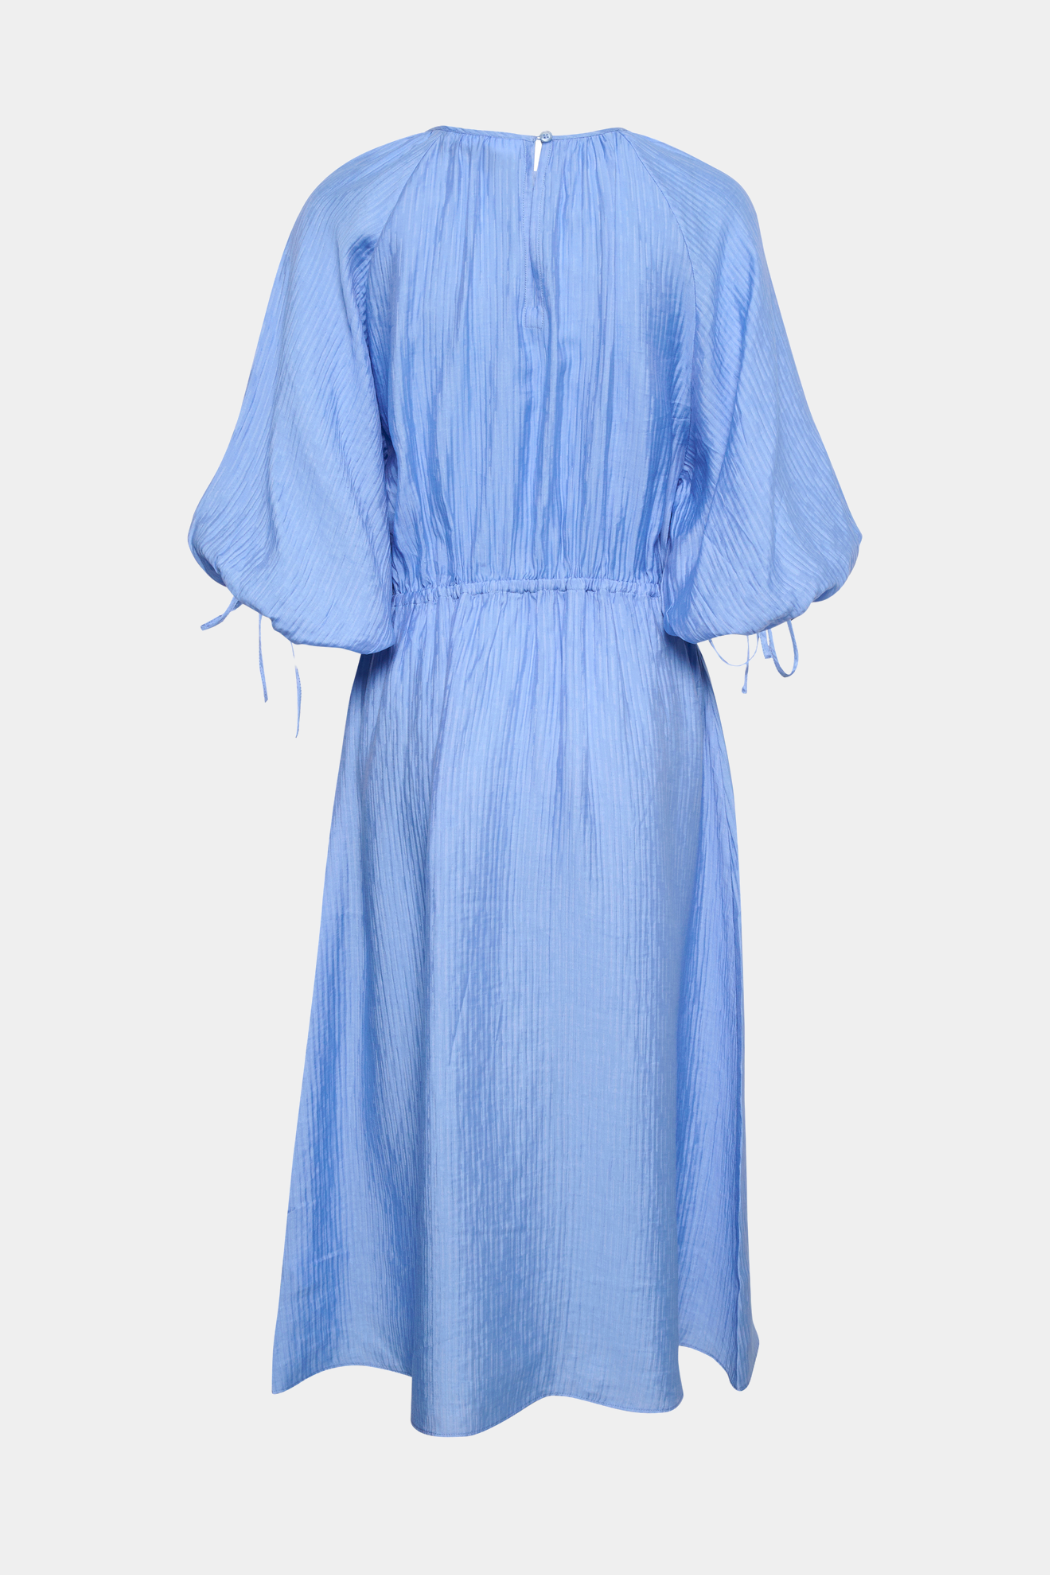 NomaKB long dress, della robbia blue